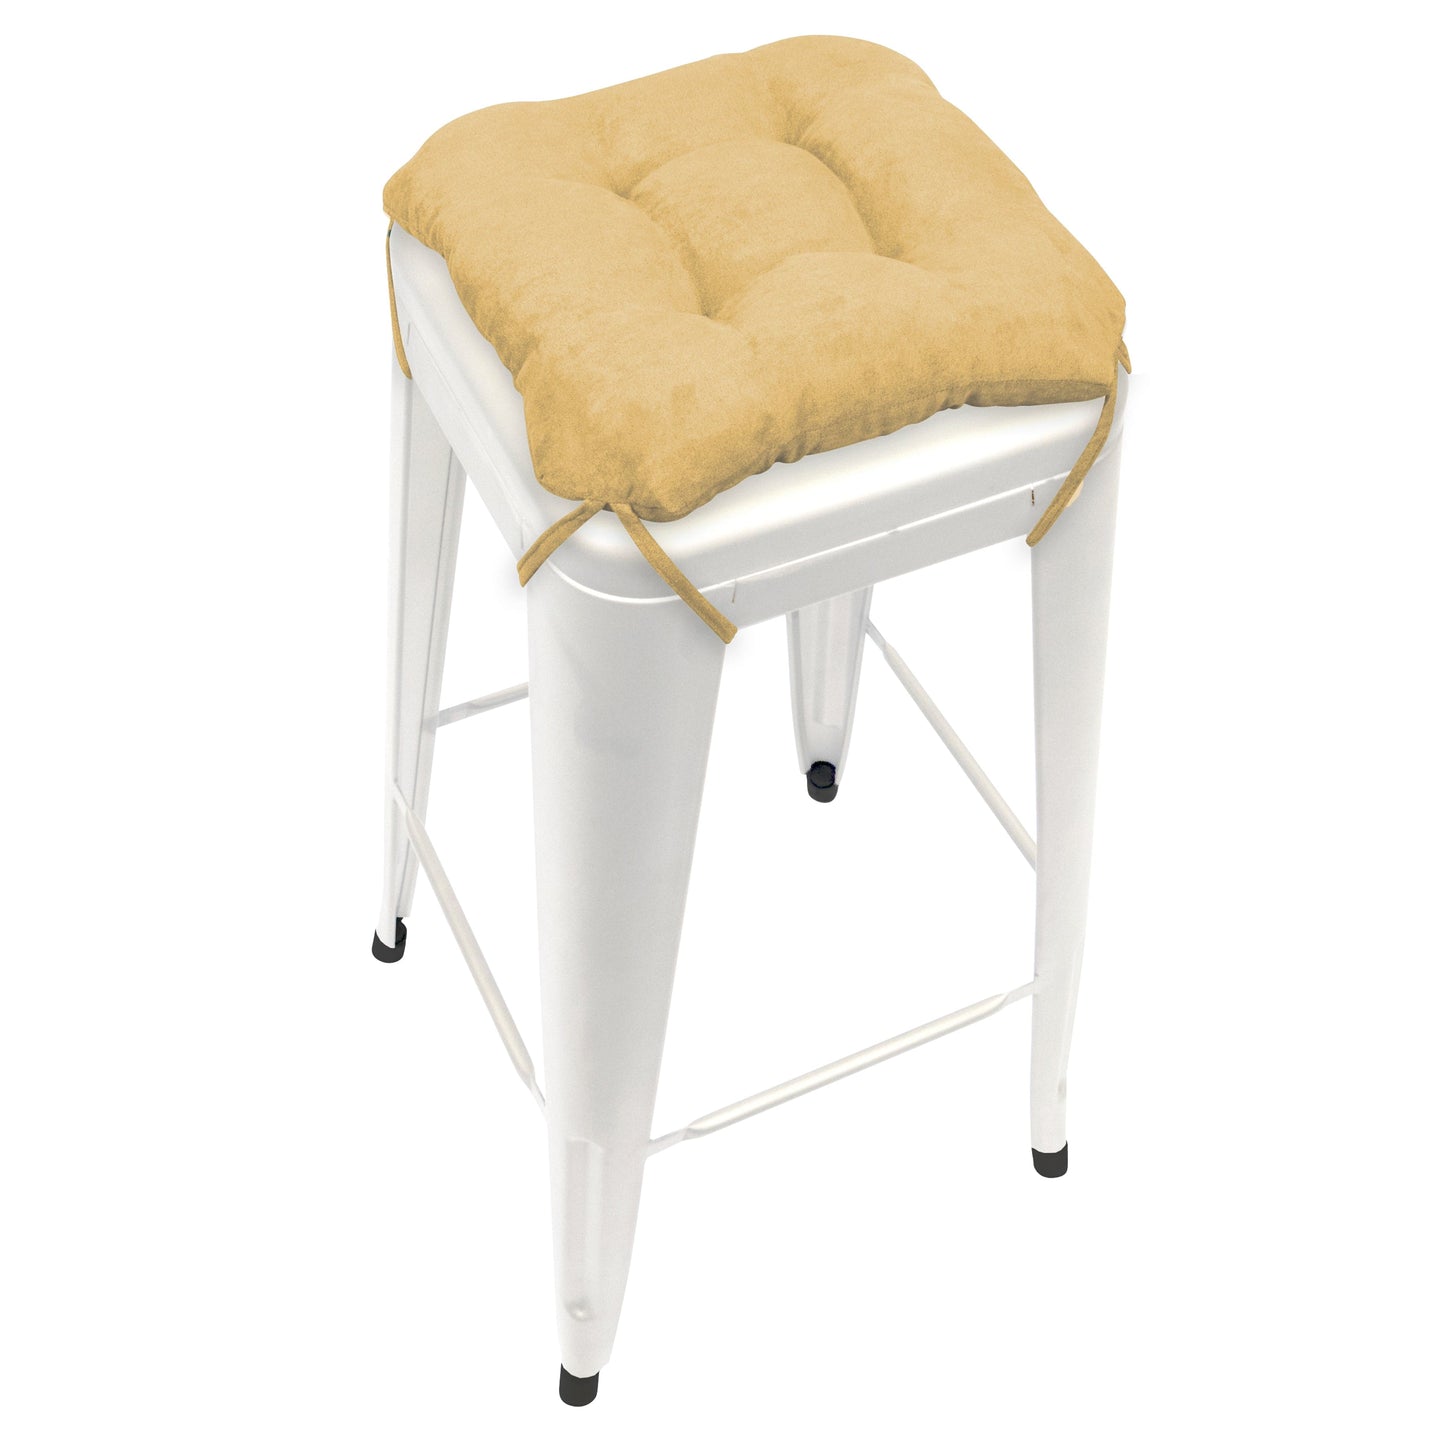 Micro-suede Camel Square Industrial Bar Stool Cushion - Latex Foam Fill - Barnett Home Decor - Sand - Tan